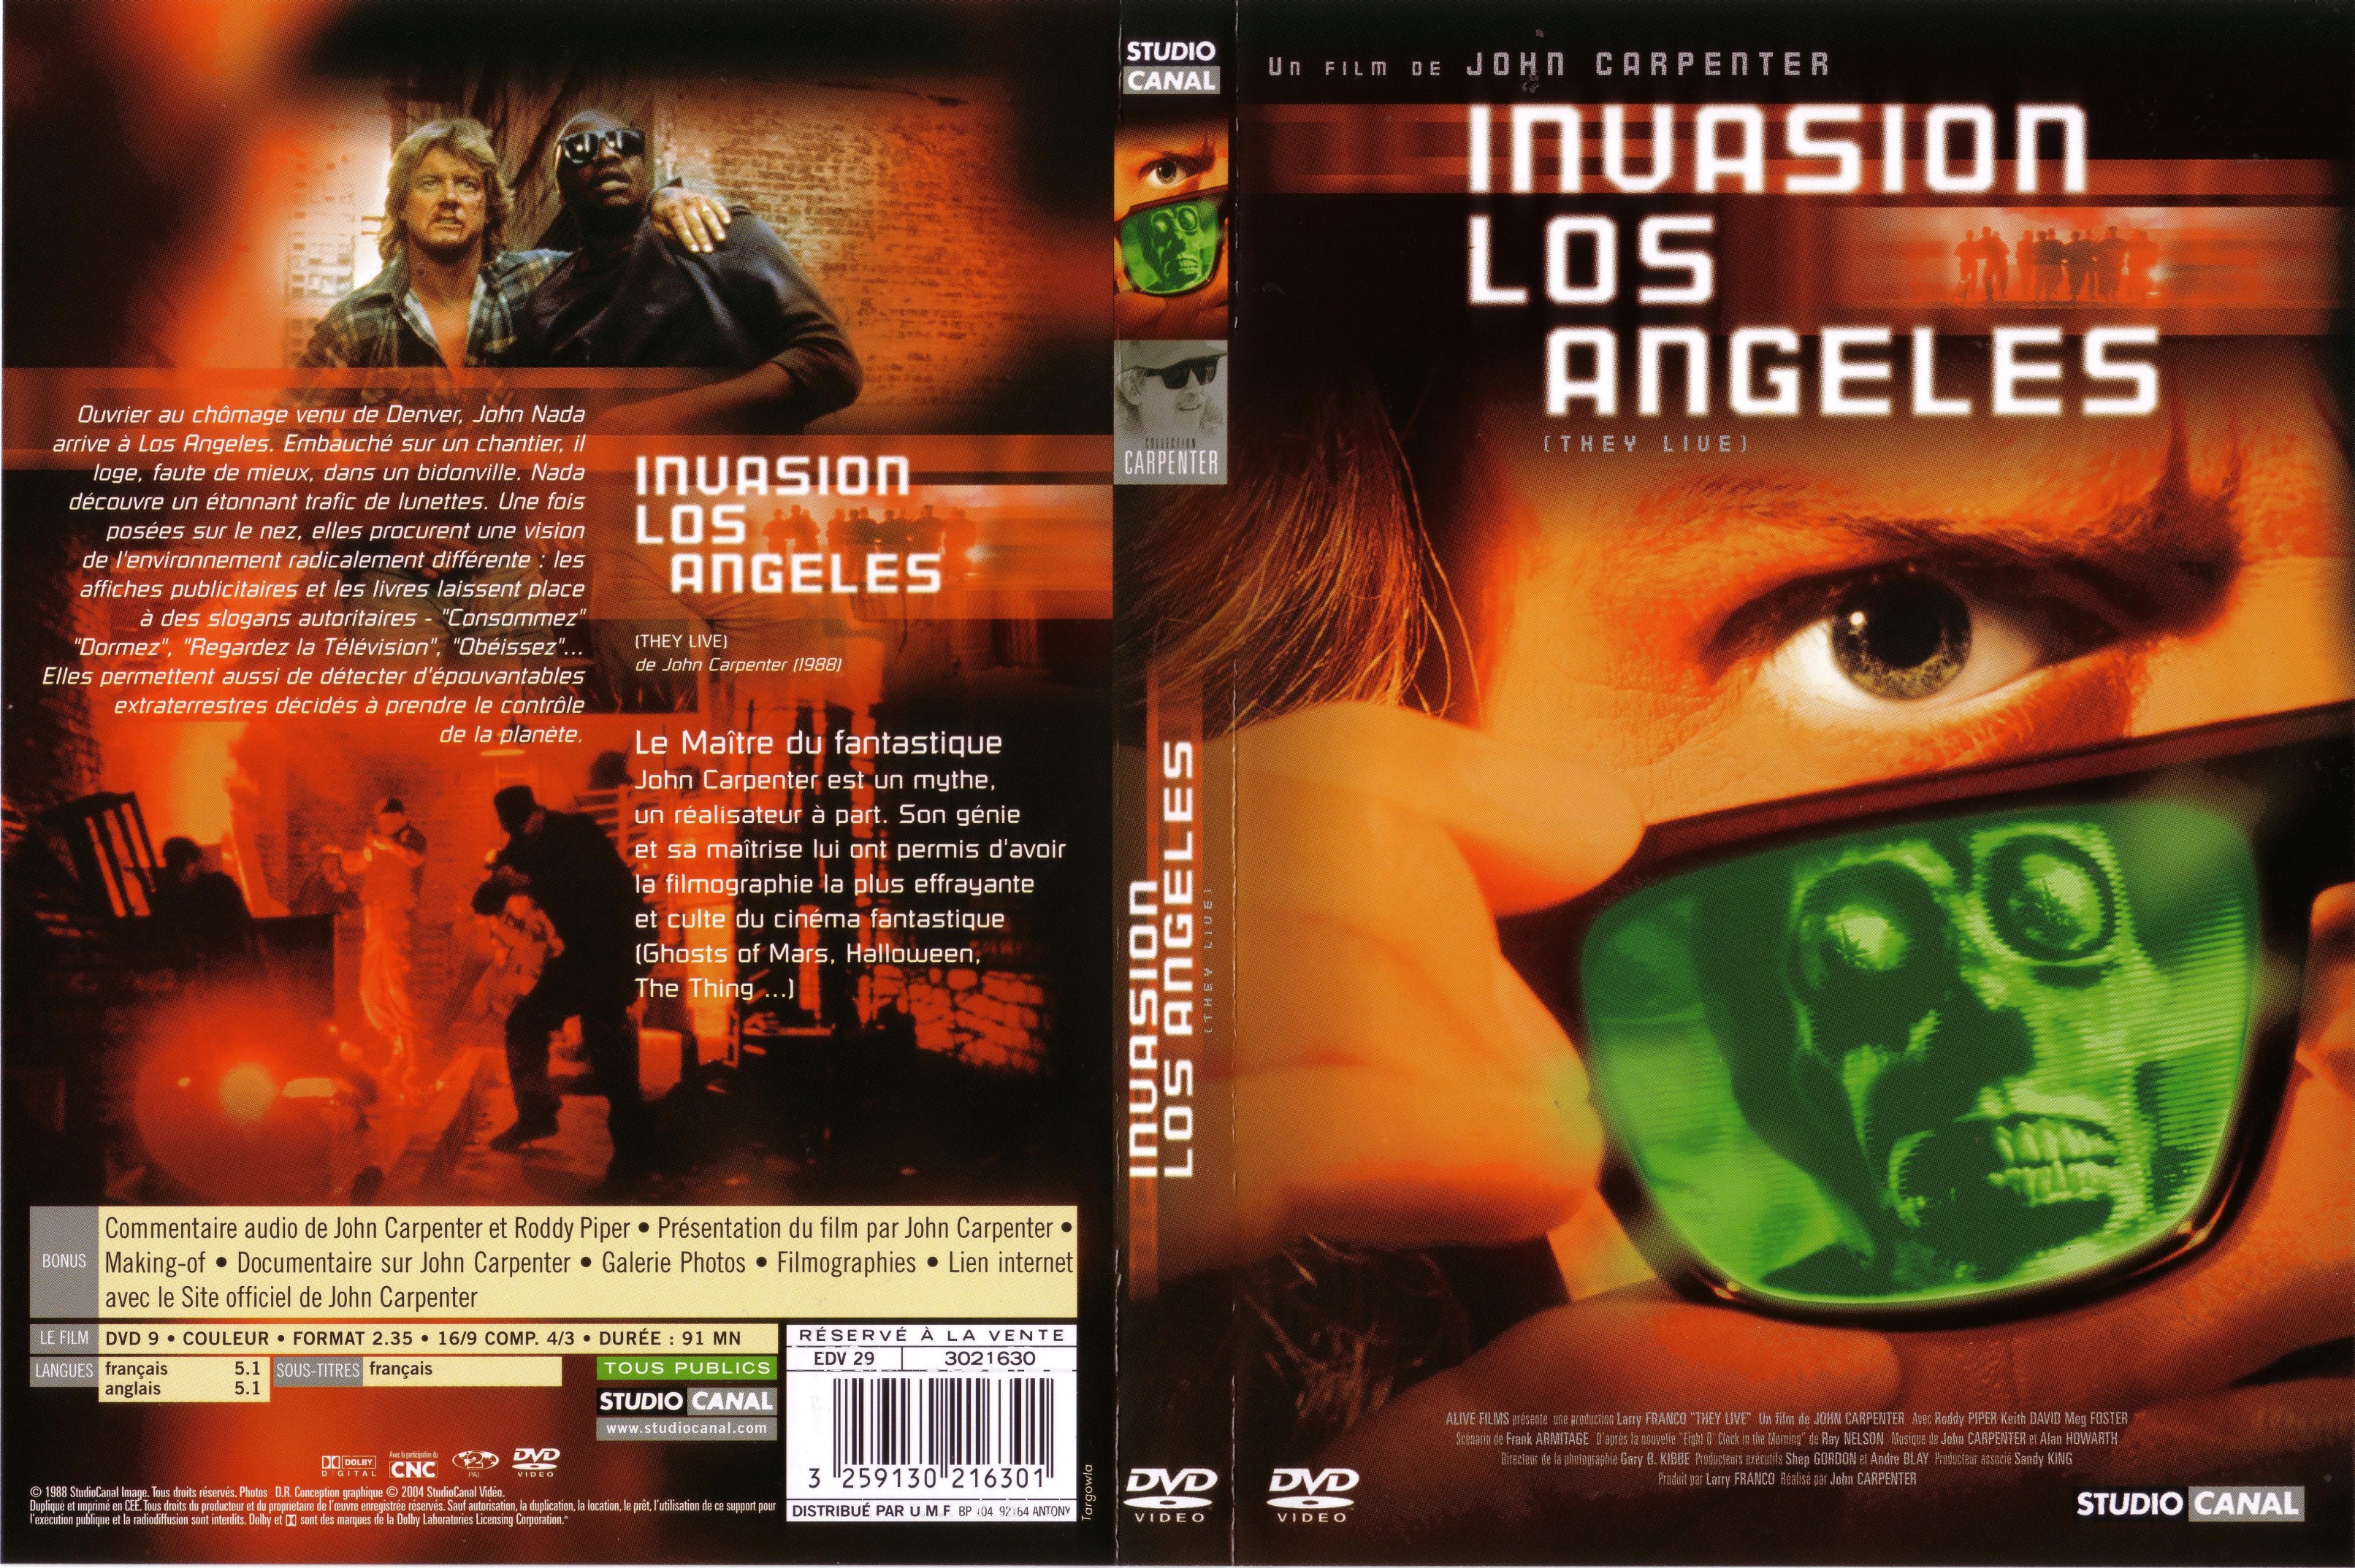 Jaquette DVD Invasion Los Angeles